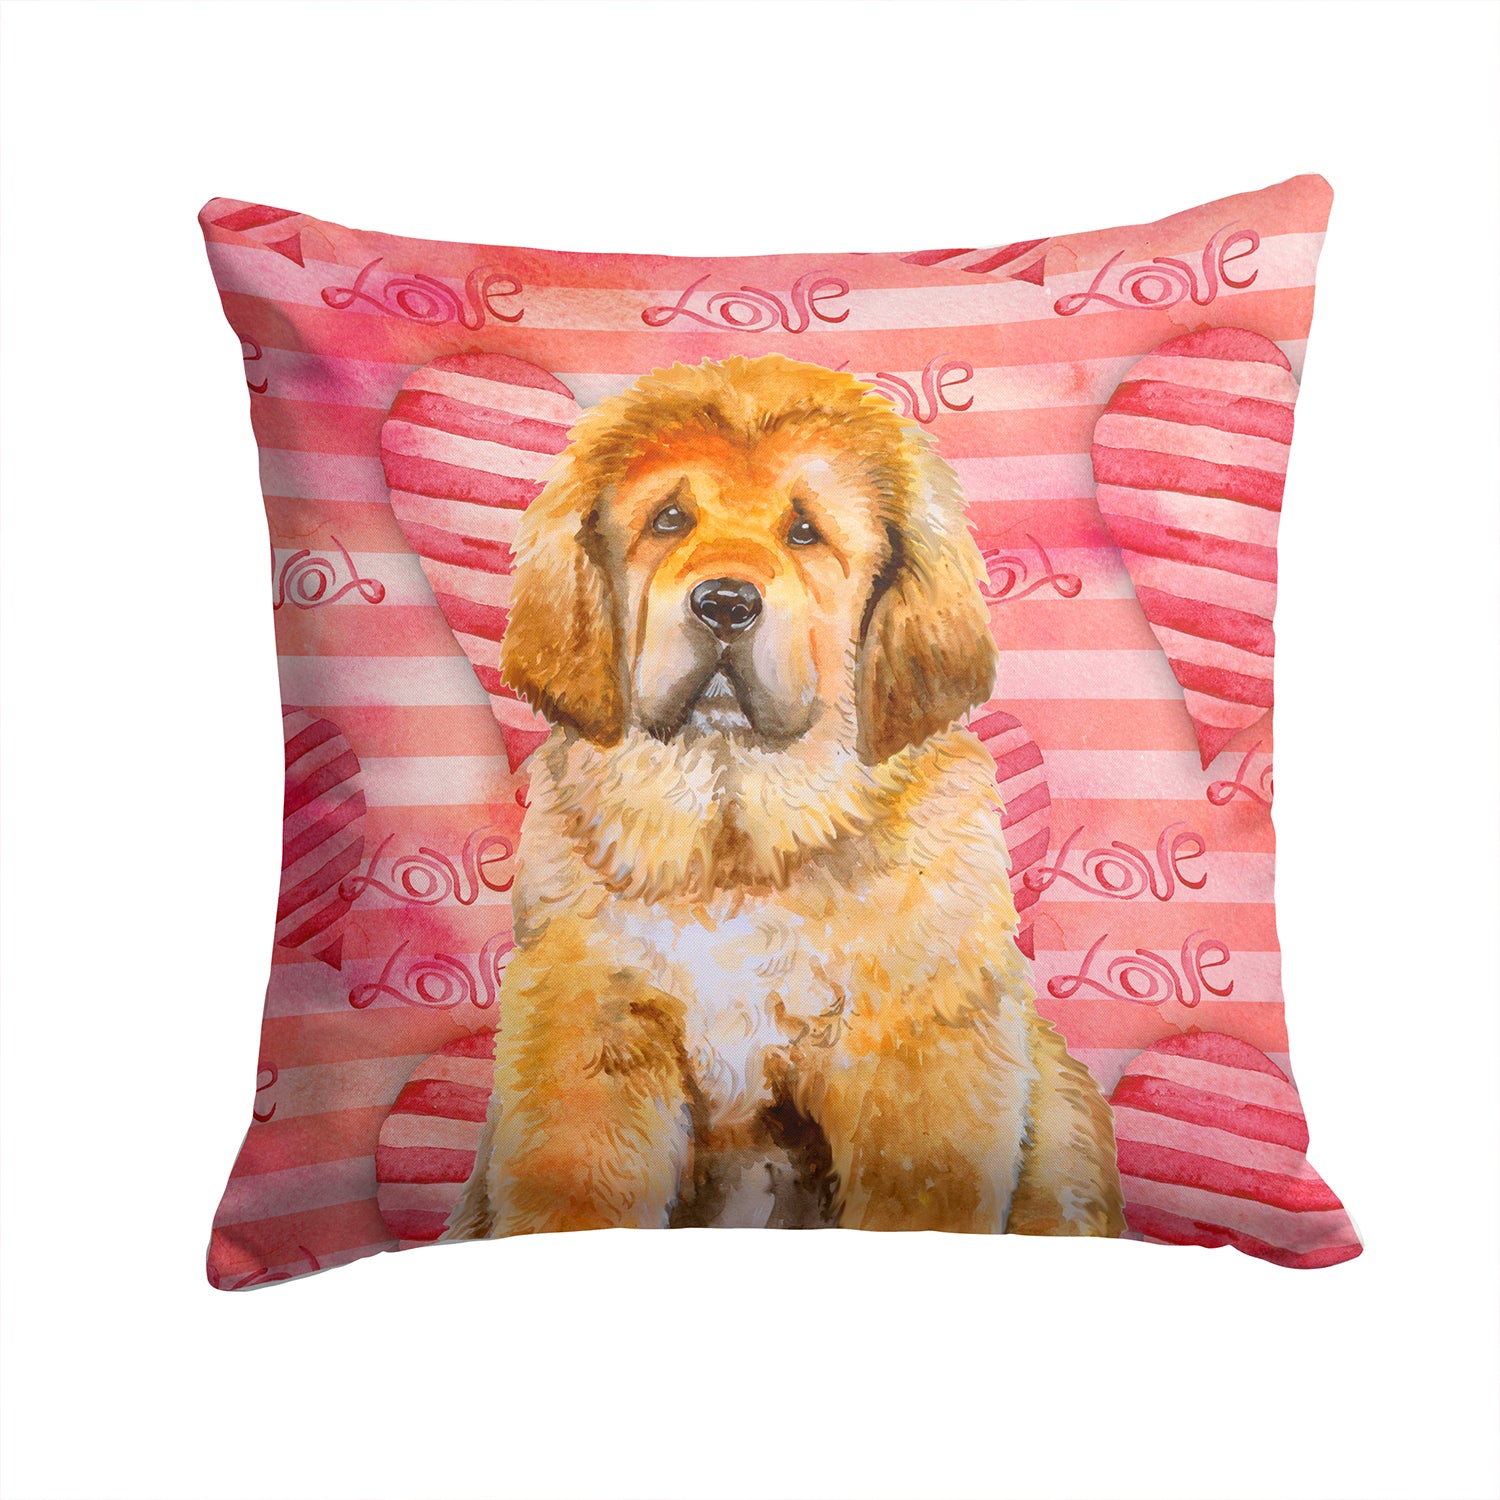 Tibetan Mastiff Love Fabric Decorative Pillow BB9808PW1414 - the-store.com